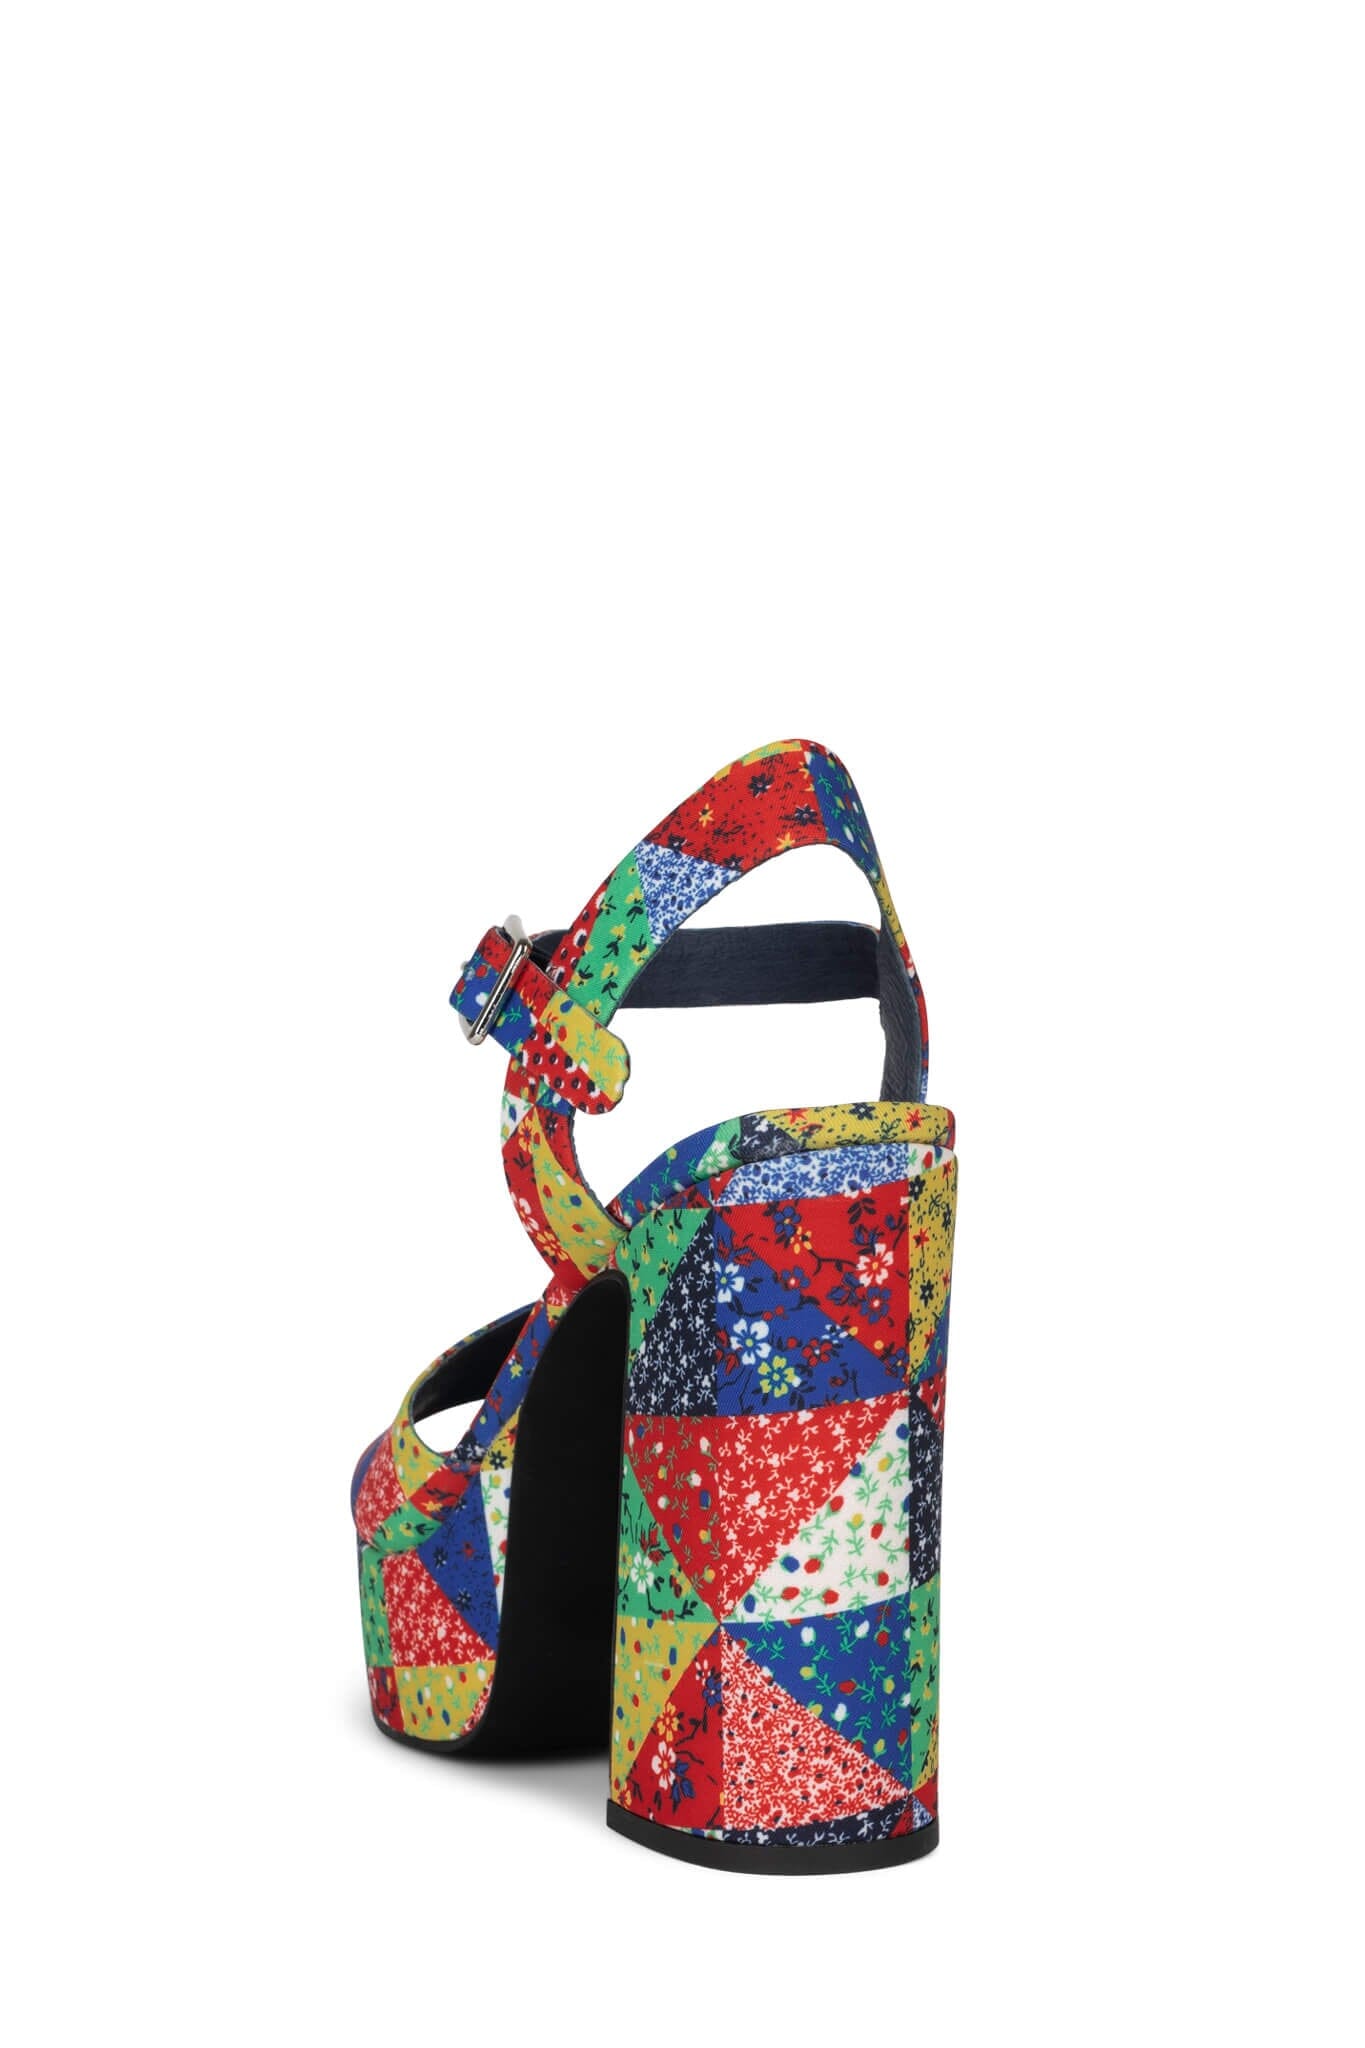 Sophia Webster Multicolor Neon Copacabana strappy sandals Heels 39.5 (Fits  US 8) | eBay